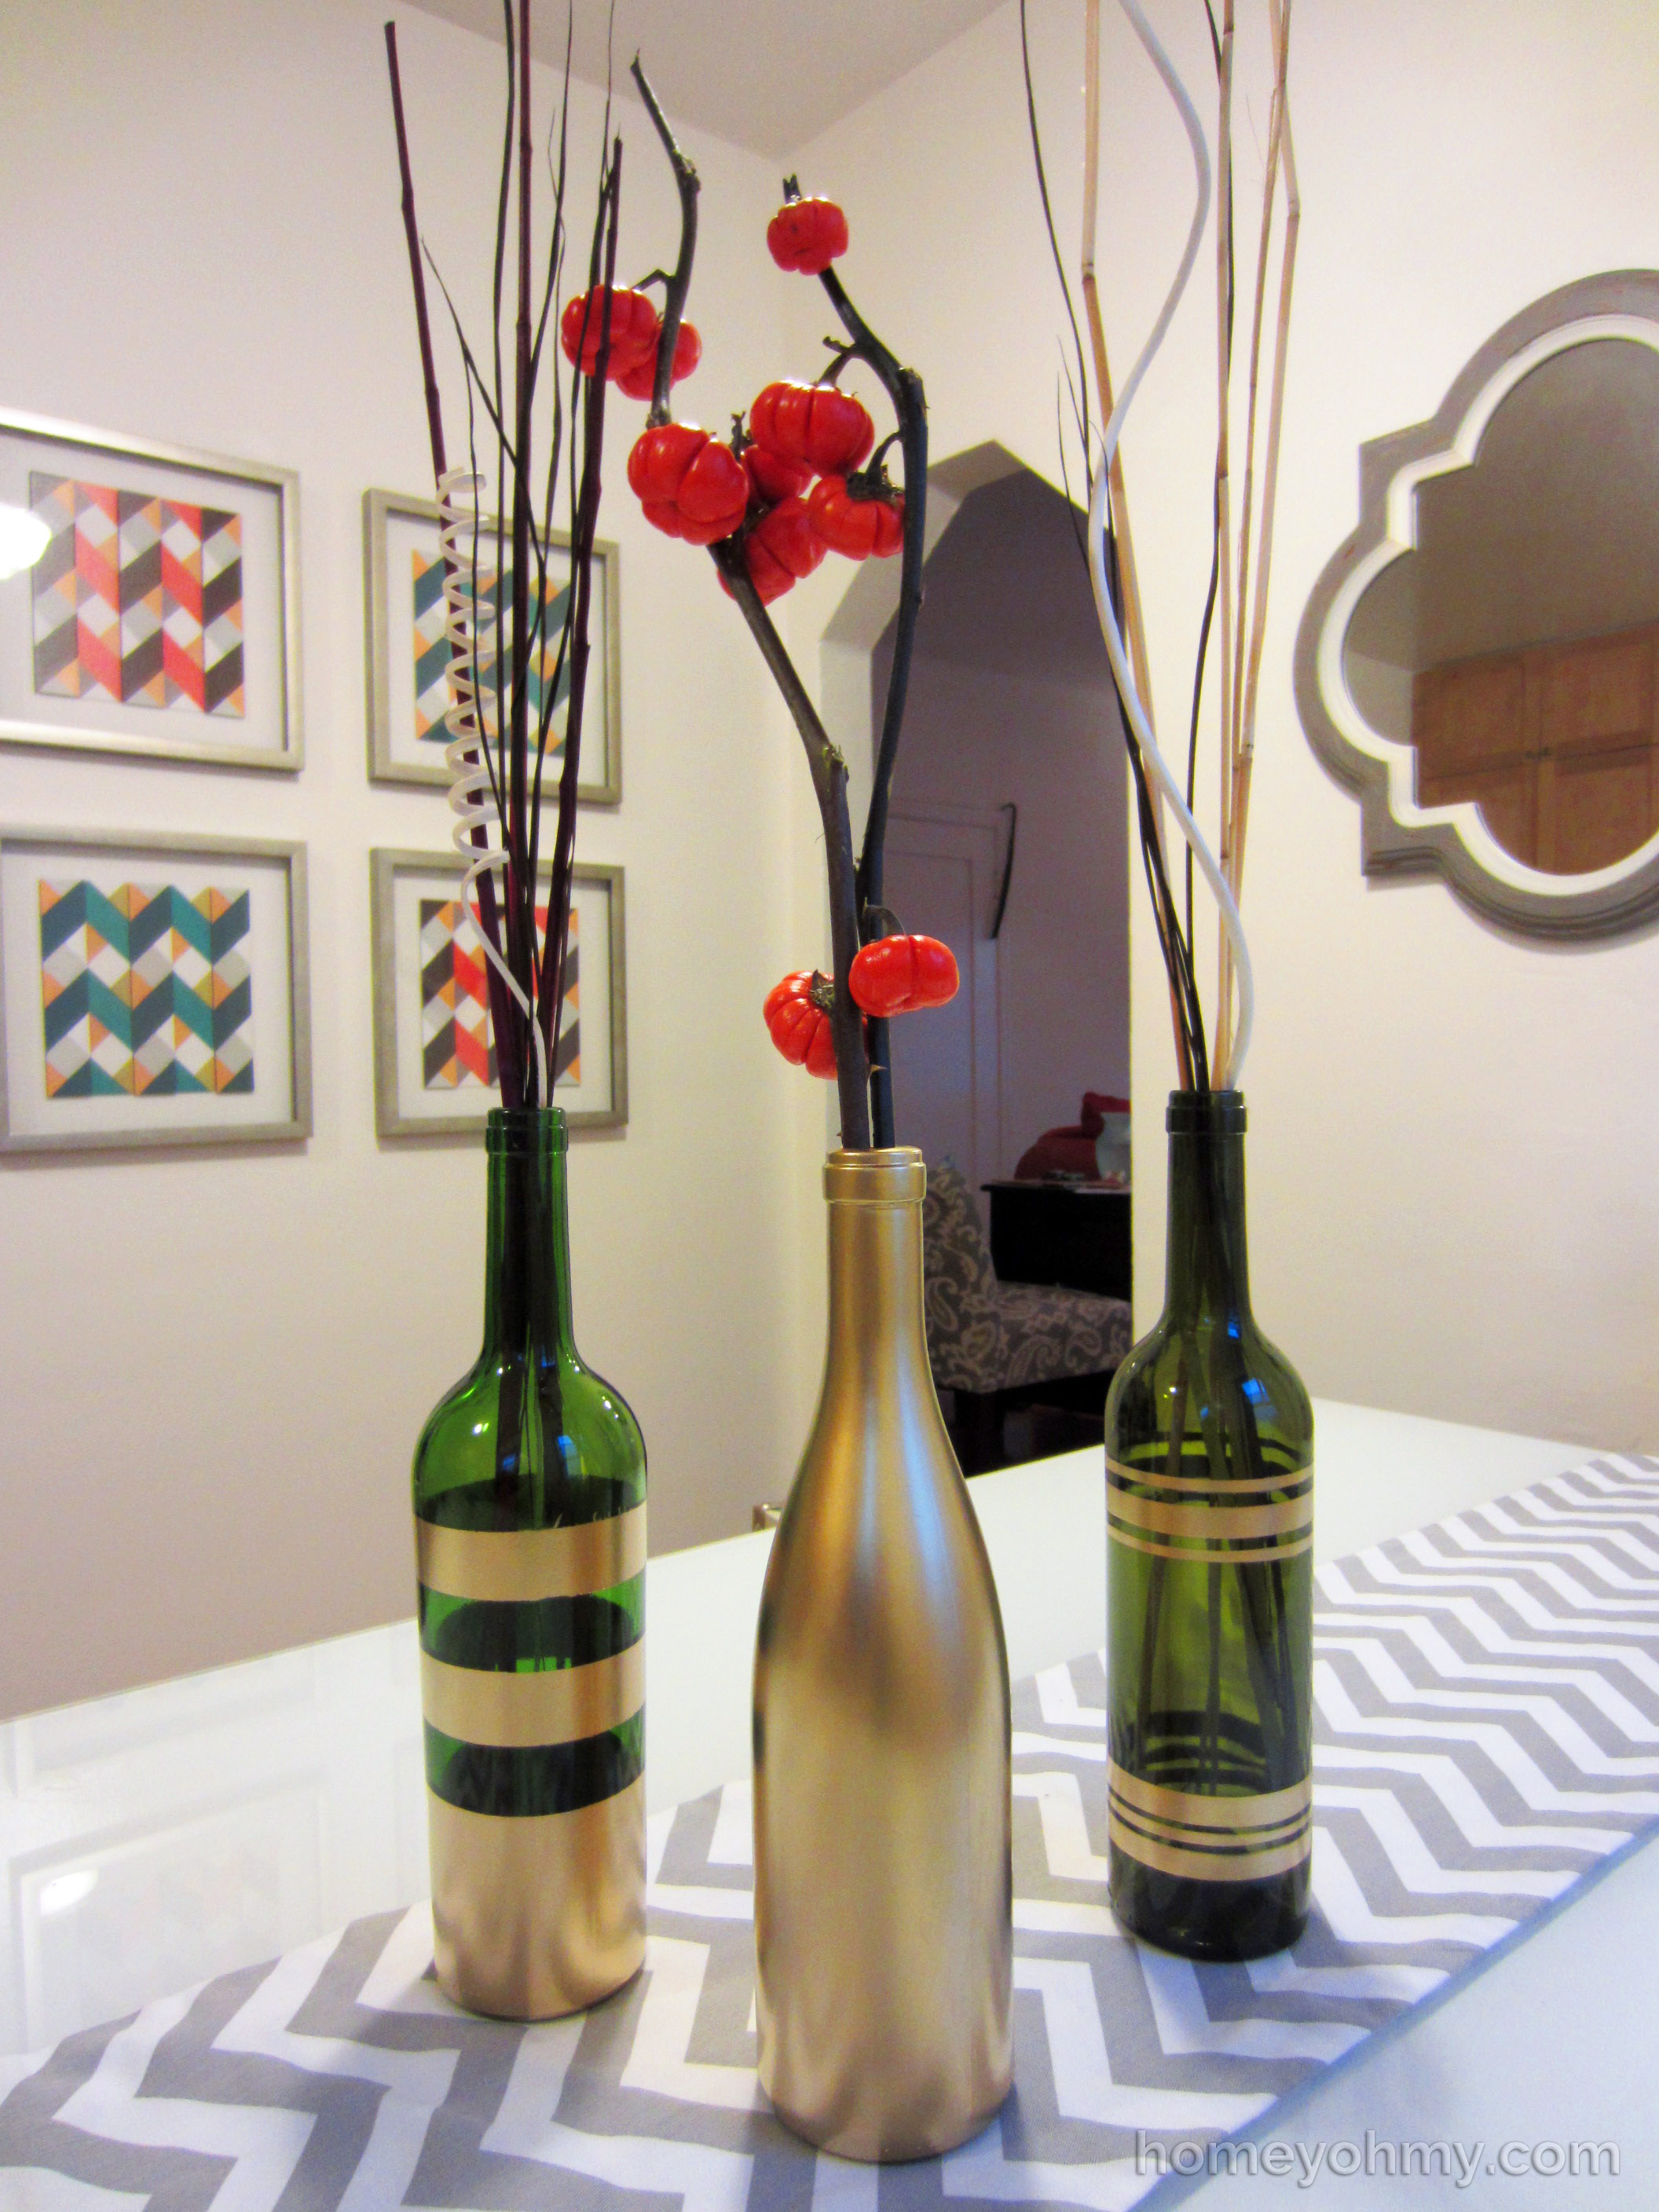 https://www.homeyohmy.com/wp-content/uploads/2013/09/DIY-Spray-Painted-Wine-Bottles-31.jpg